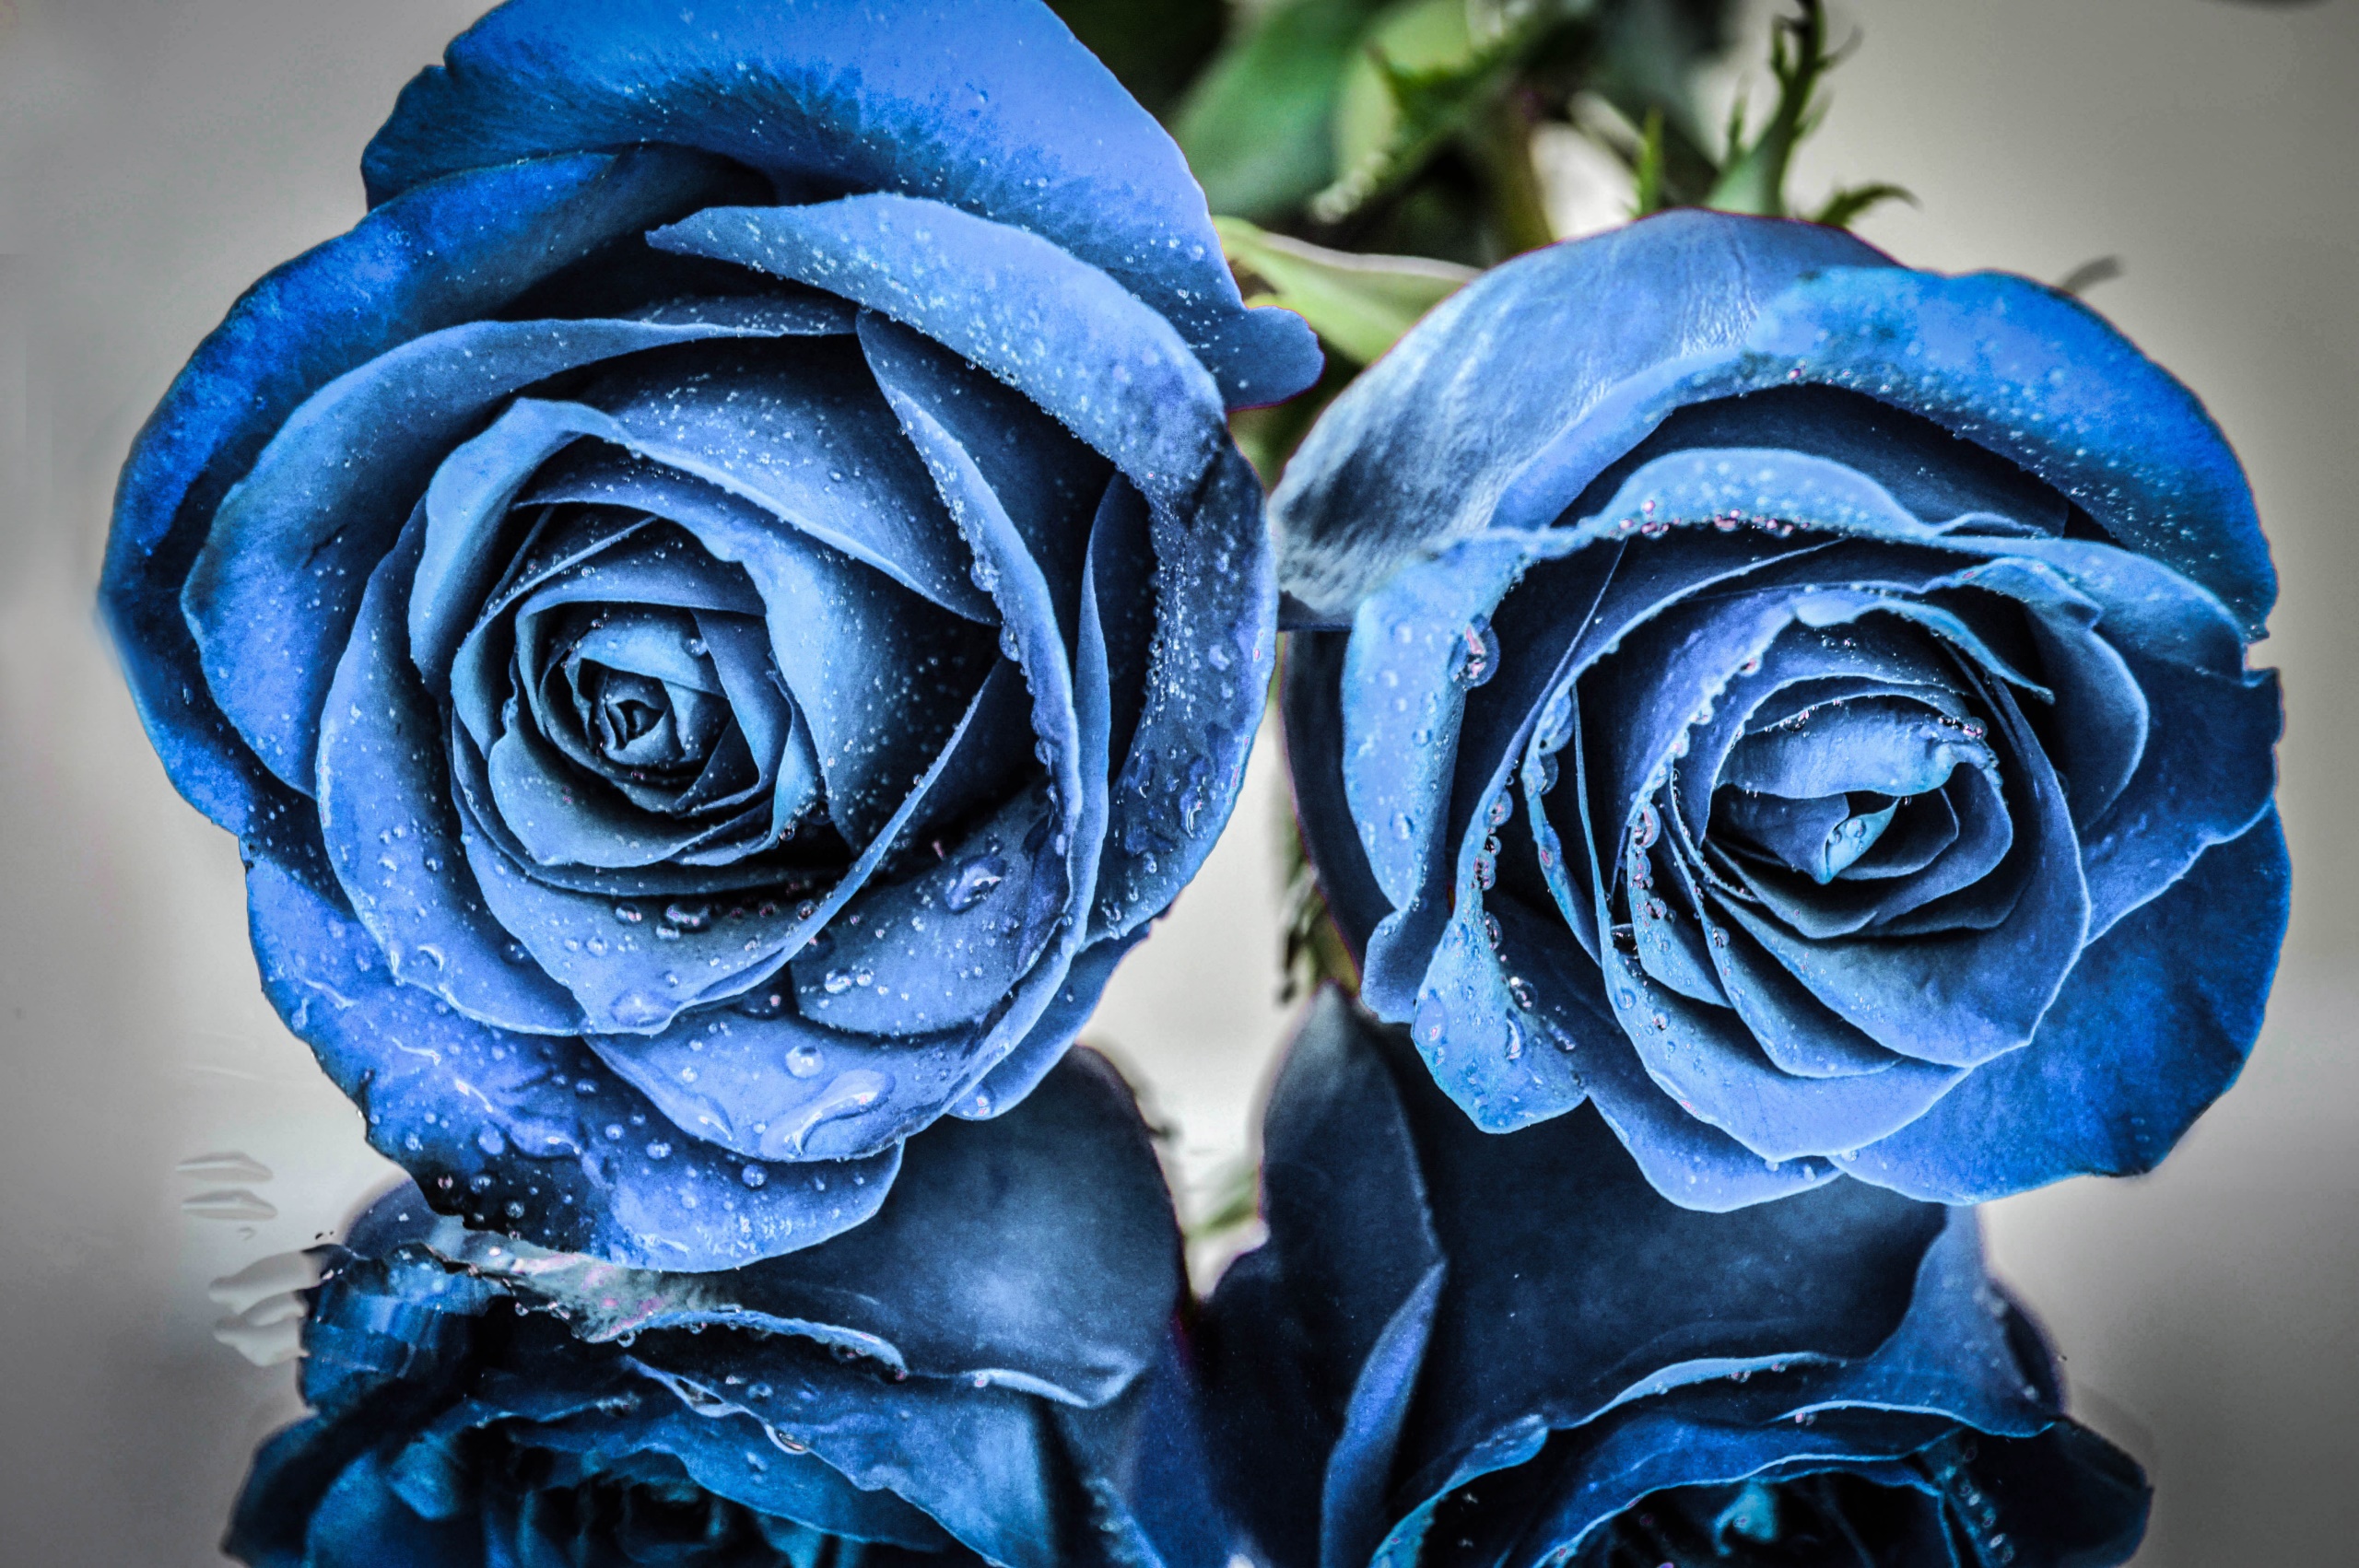 water rose mobile wallpapers,flower,rose,flowering plant,blue,blue rose